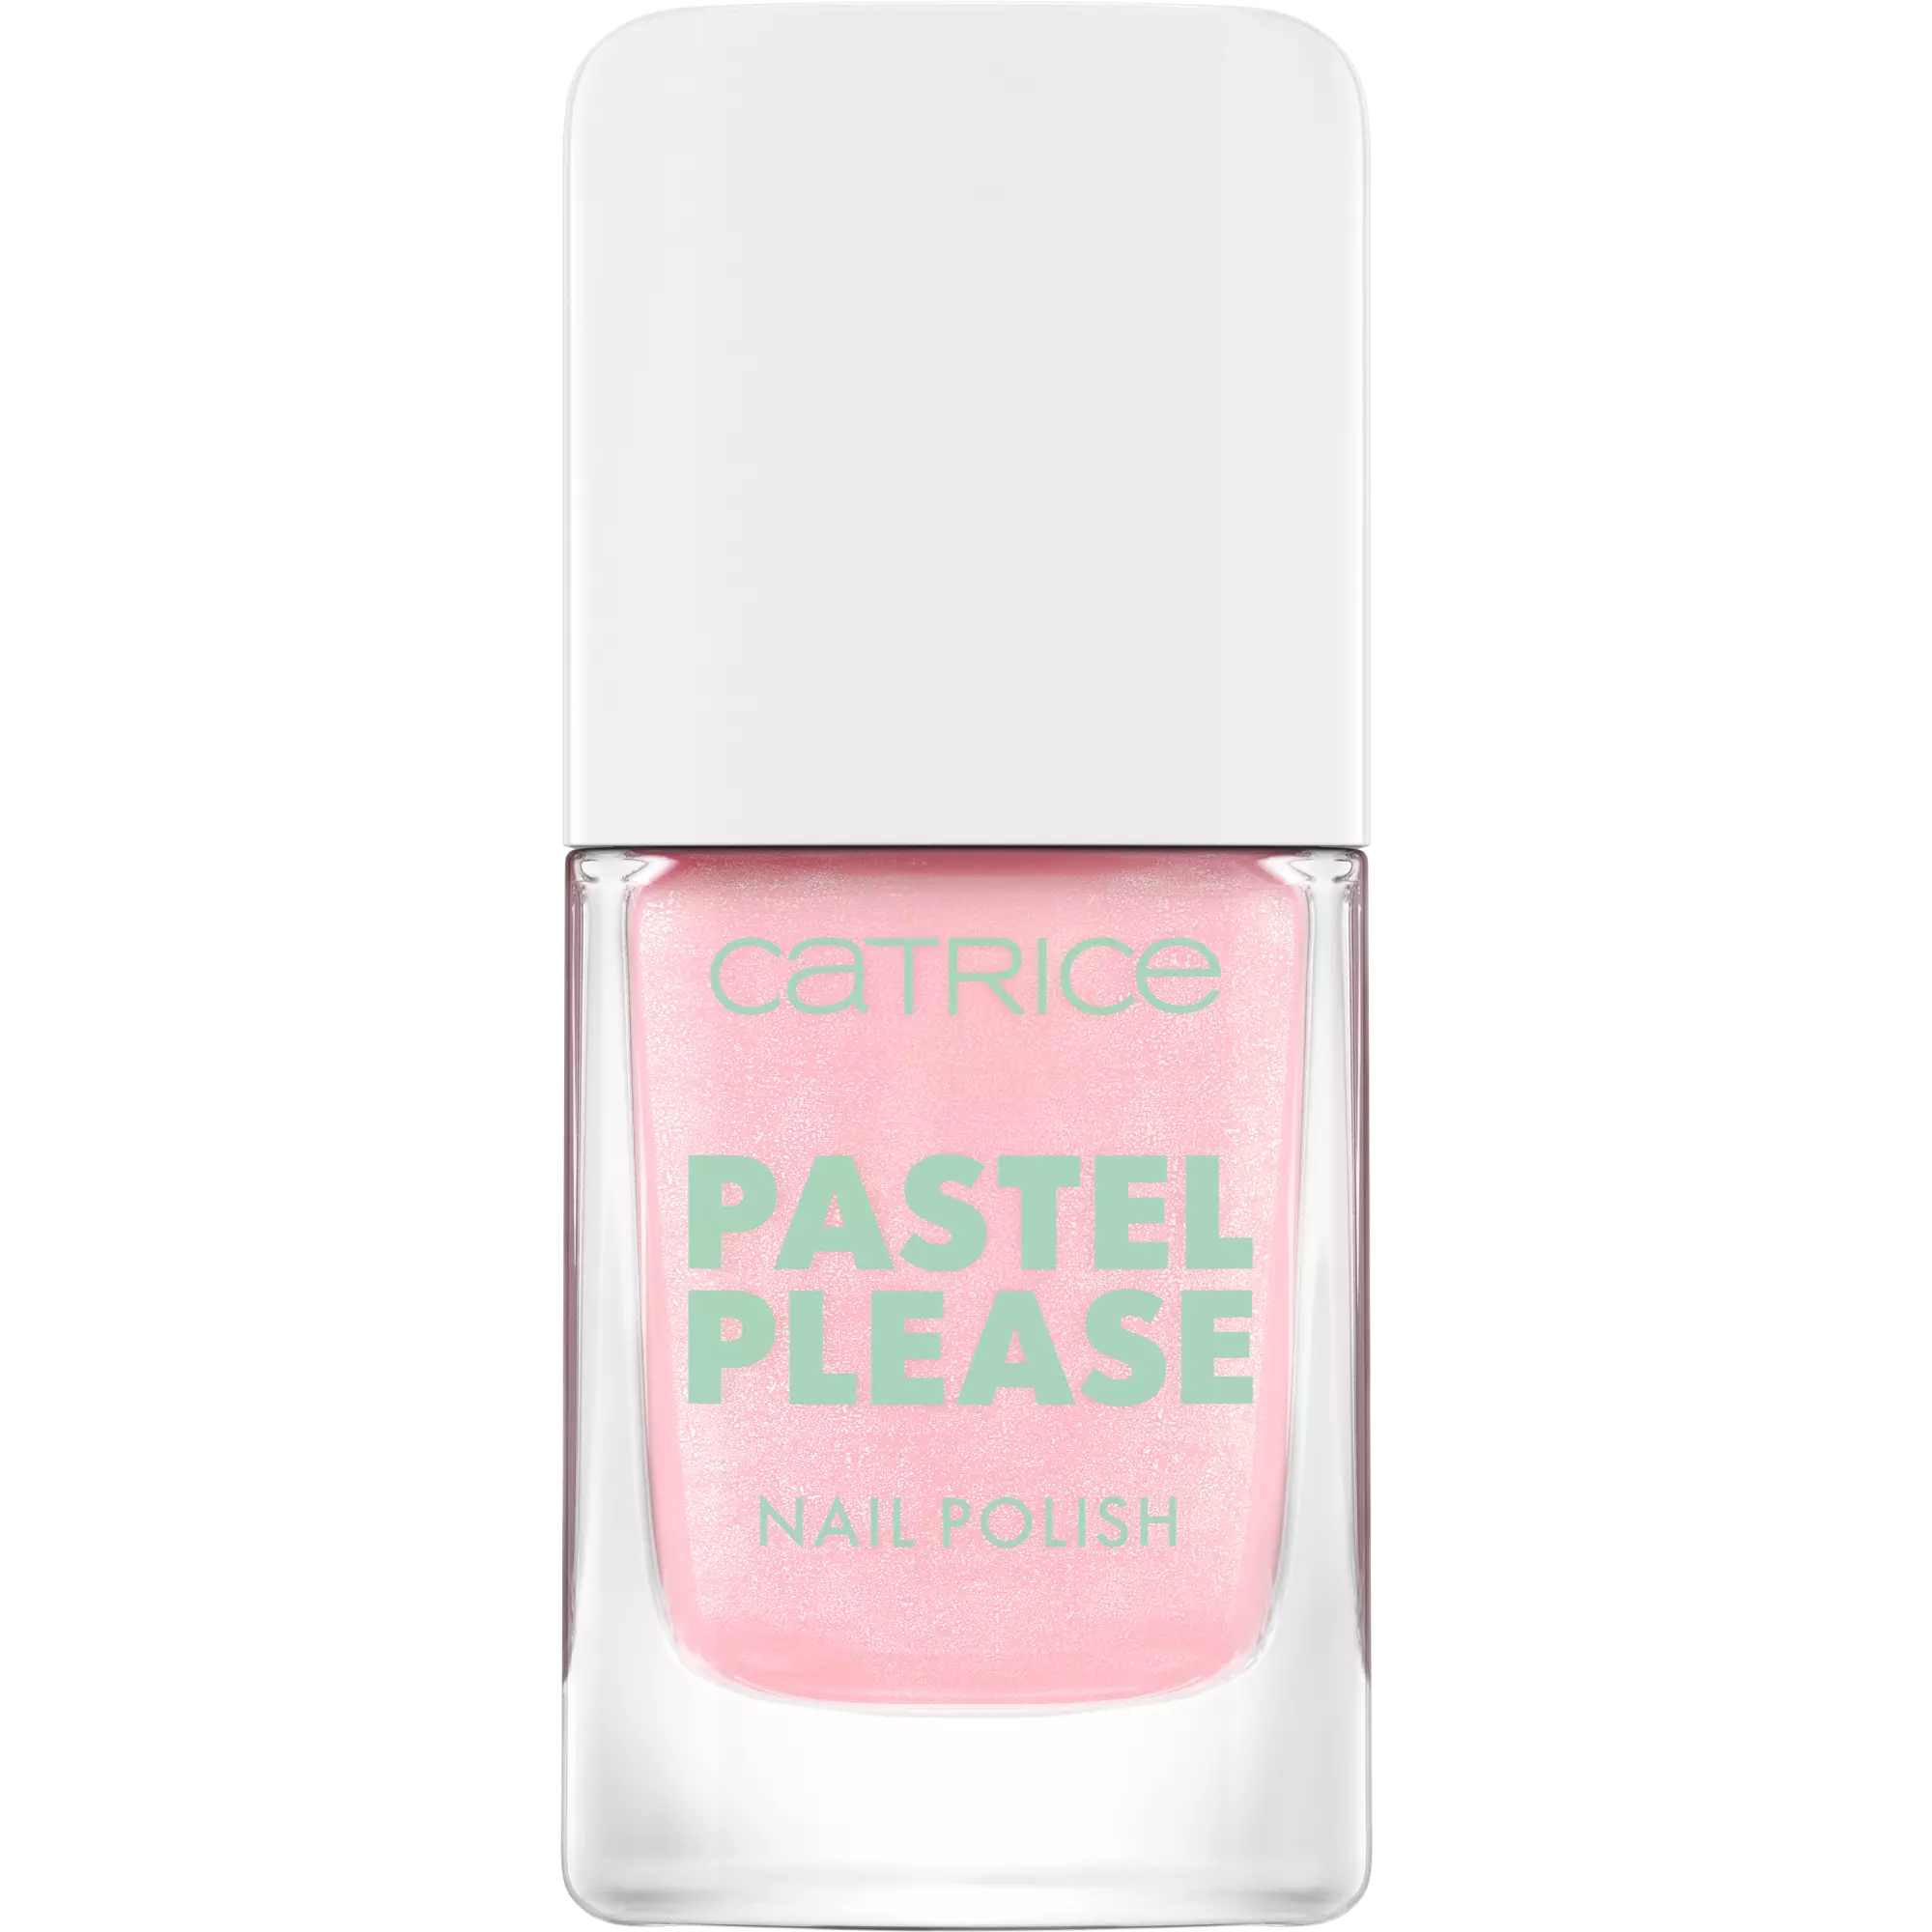 Catrice Pastel Please Nail Polish - 010 Think Pink